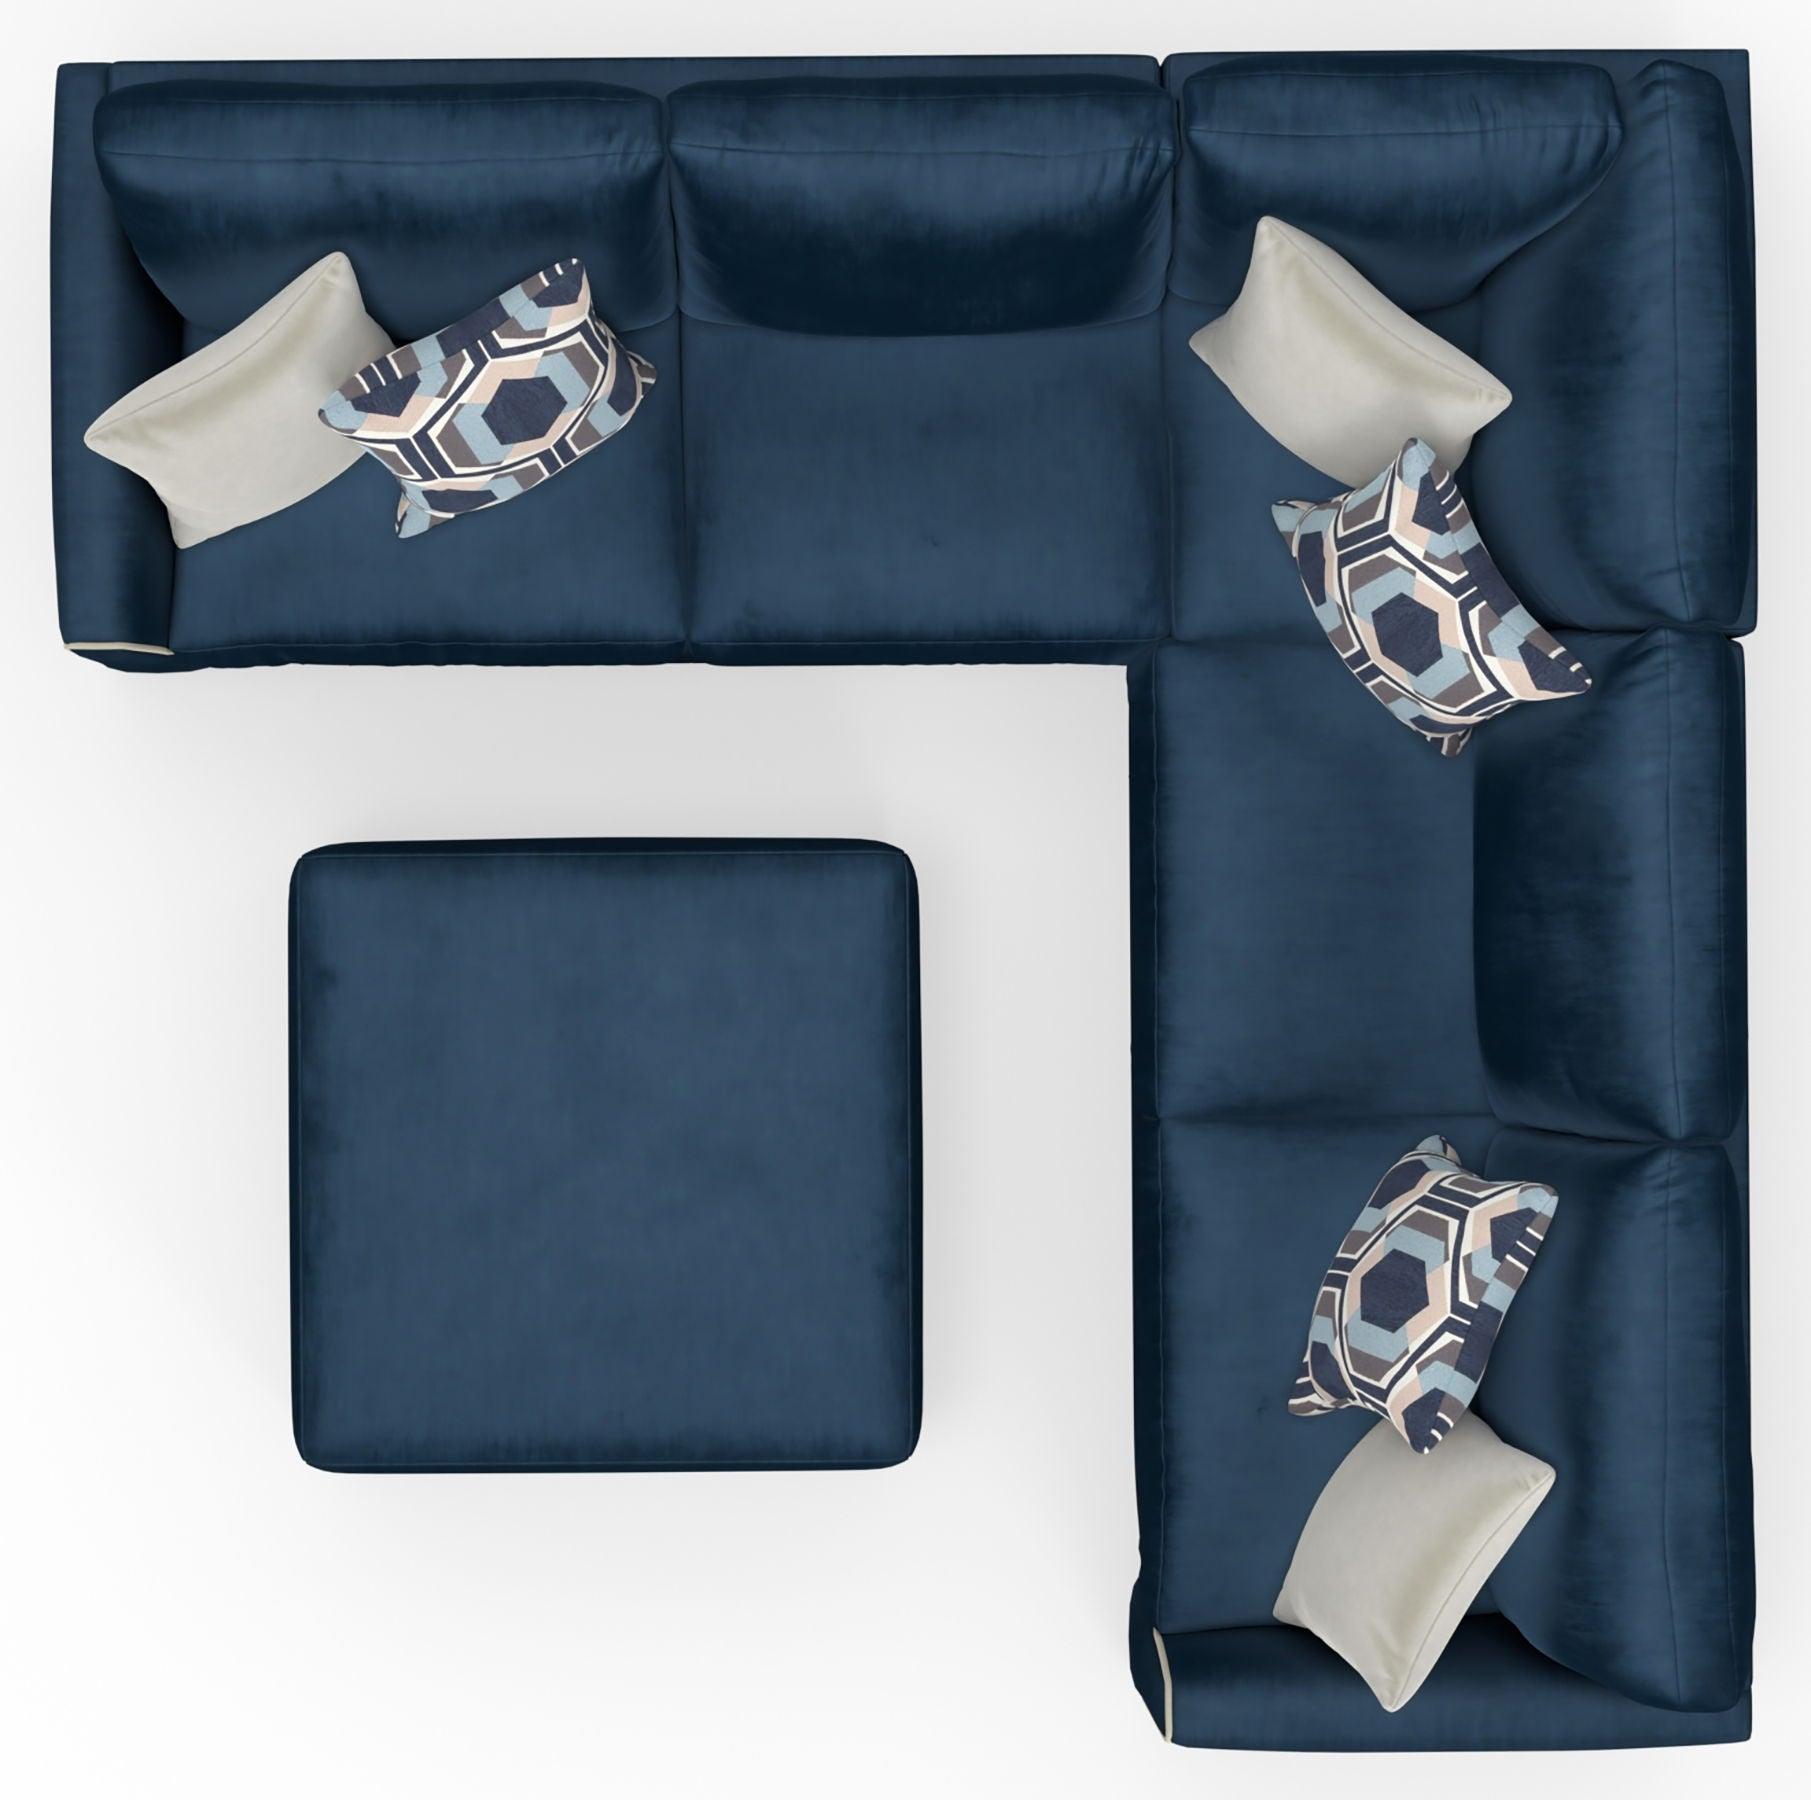 Jackson - Jetson - Sectional, Accent Pillows & Cocktail Ottoman Set - 5th Avenue Furniture